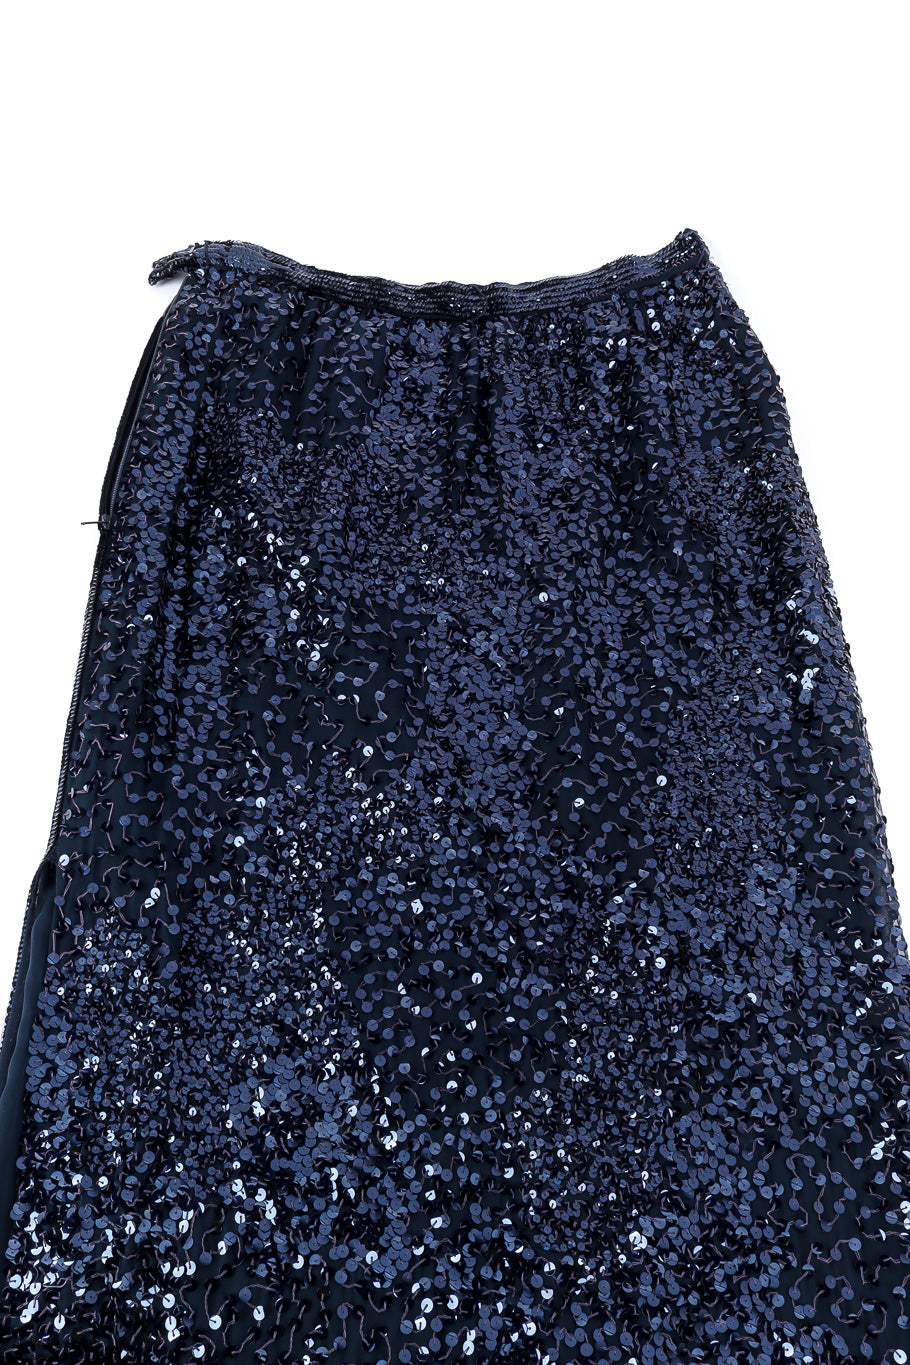 Midnight sequin skirt by Gianfranco Ferre flat lay @recessla